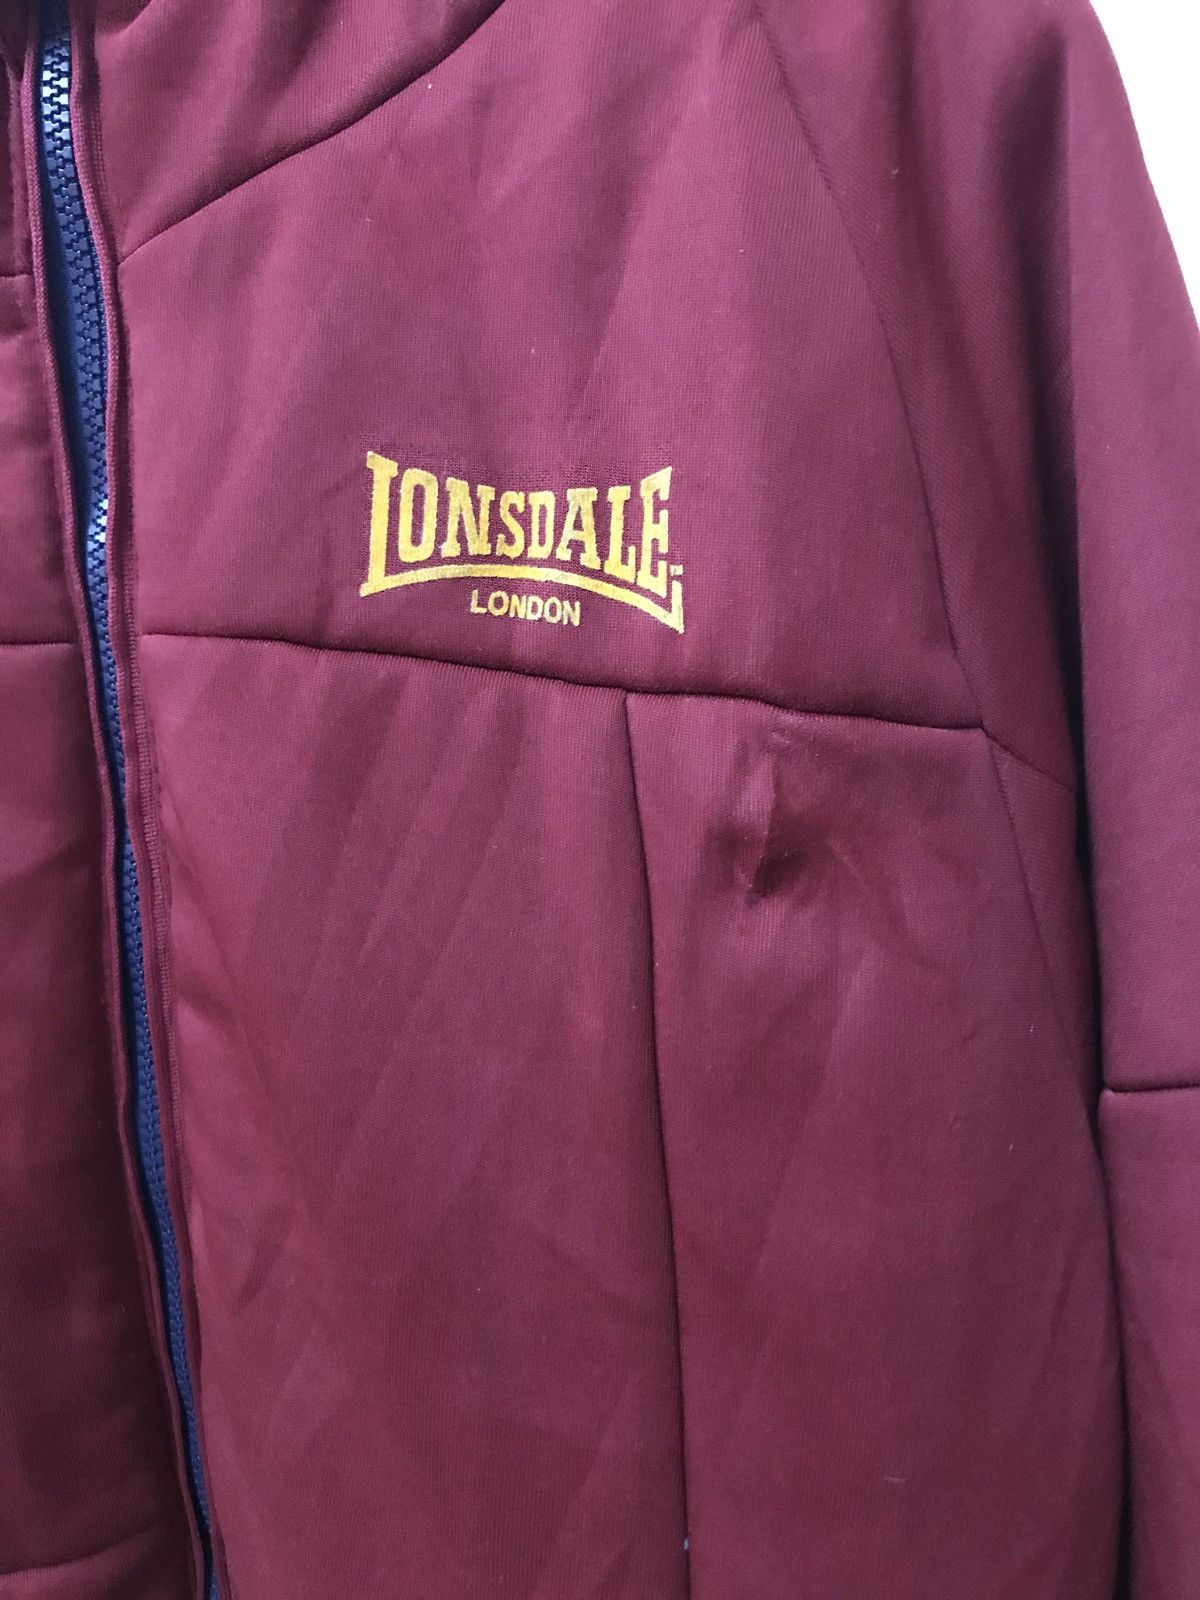 Lonsdale Lonsdale Hoodie Jacket Size US L / EU 52-54 / 3 - 3 Thumbnail